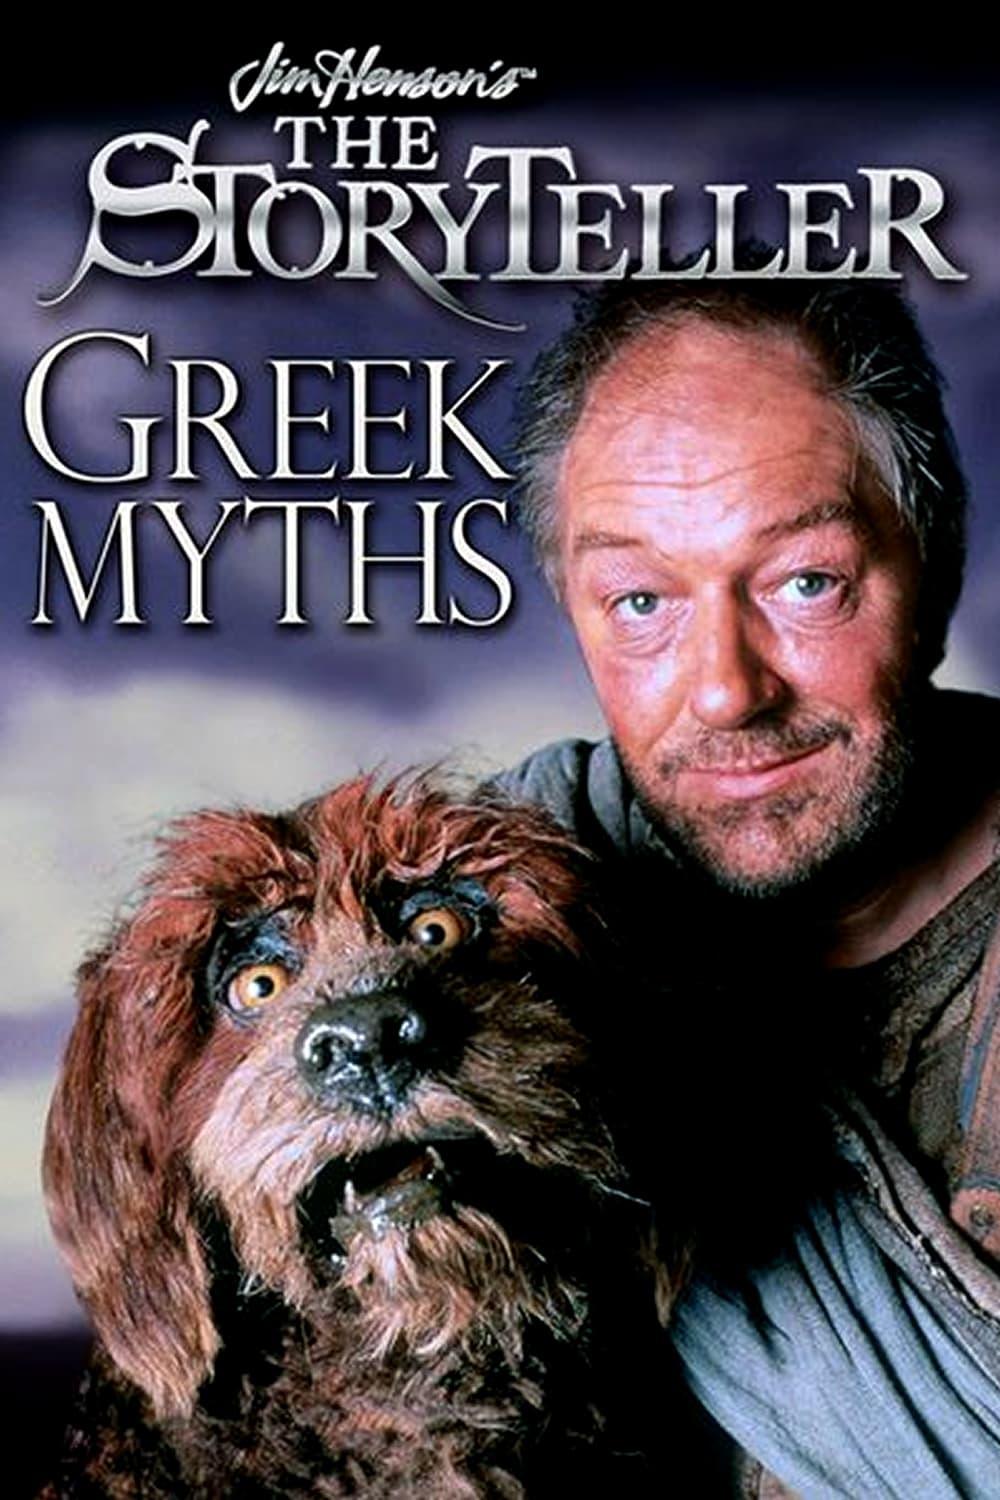 The Storyteller: Greek Myths poster